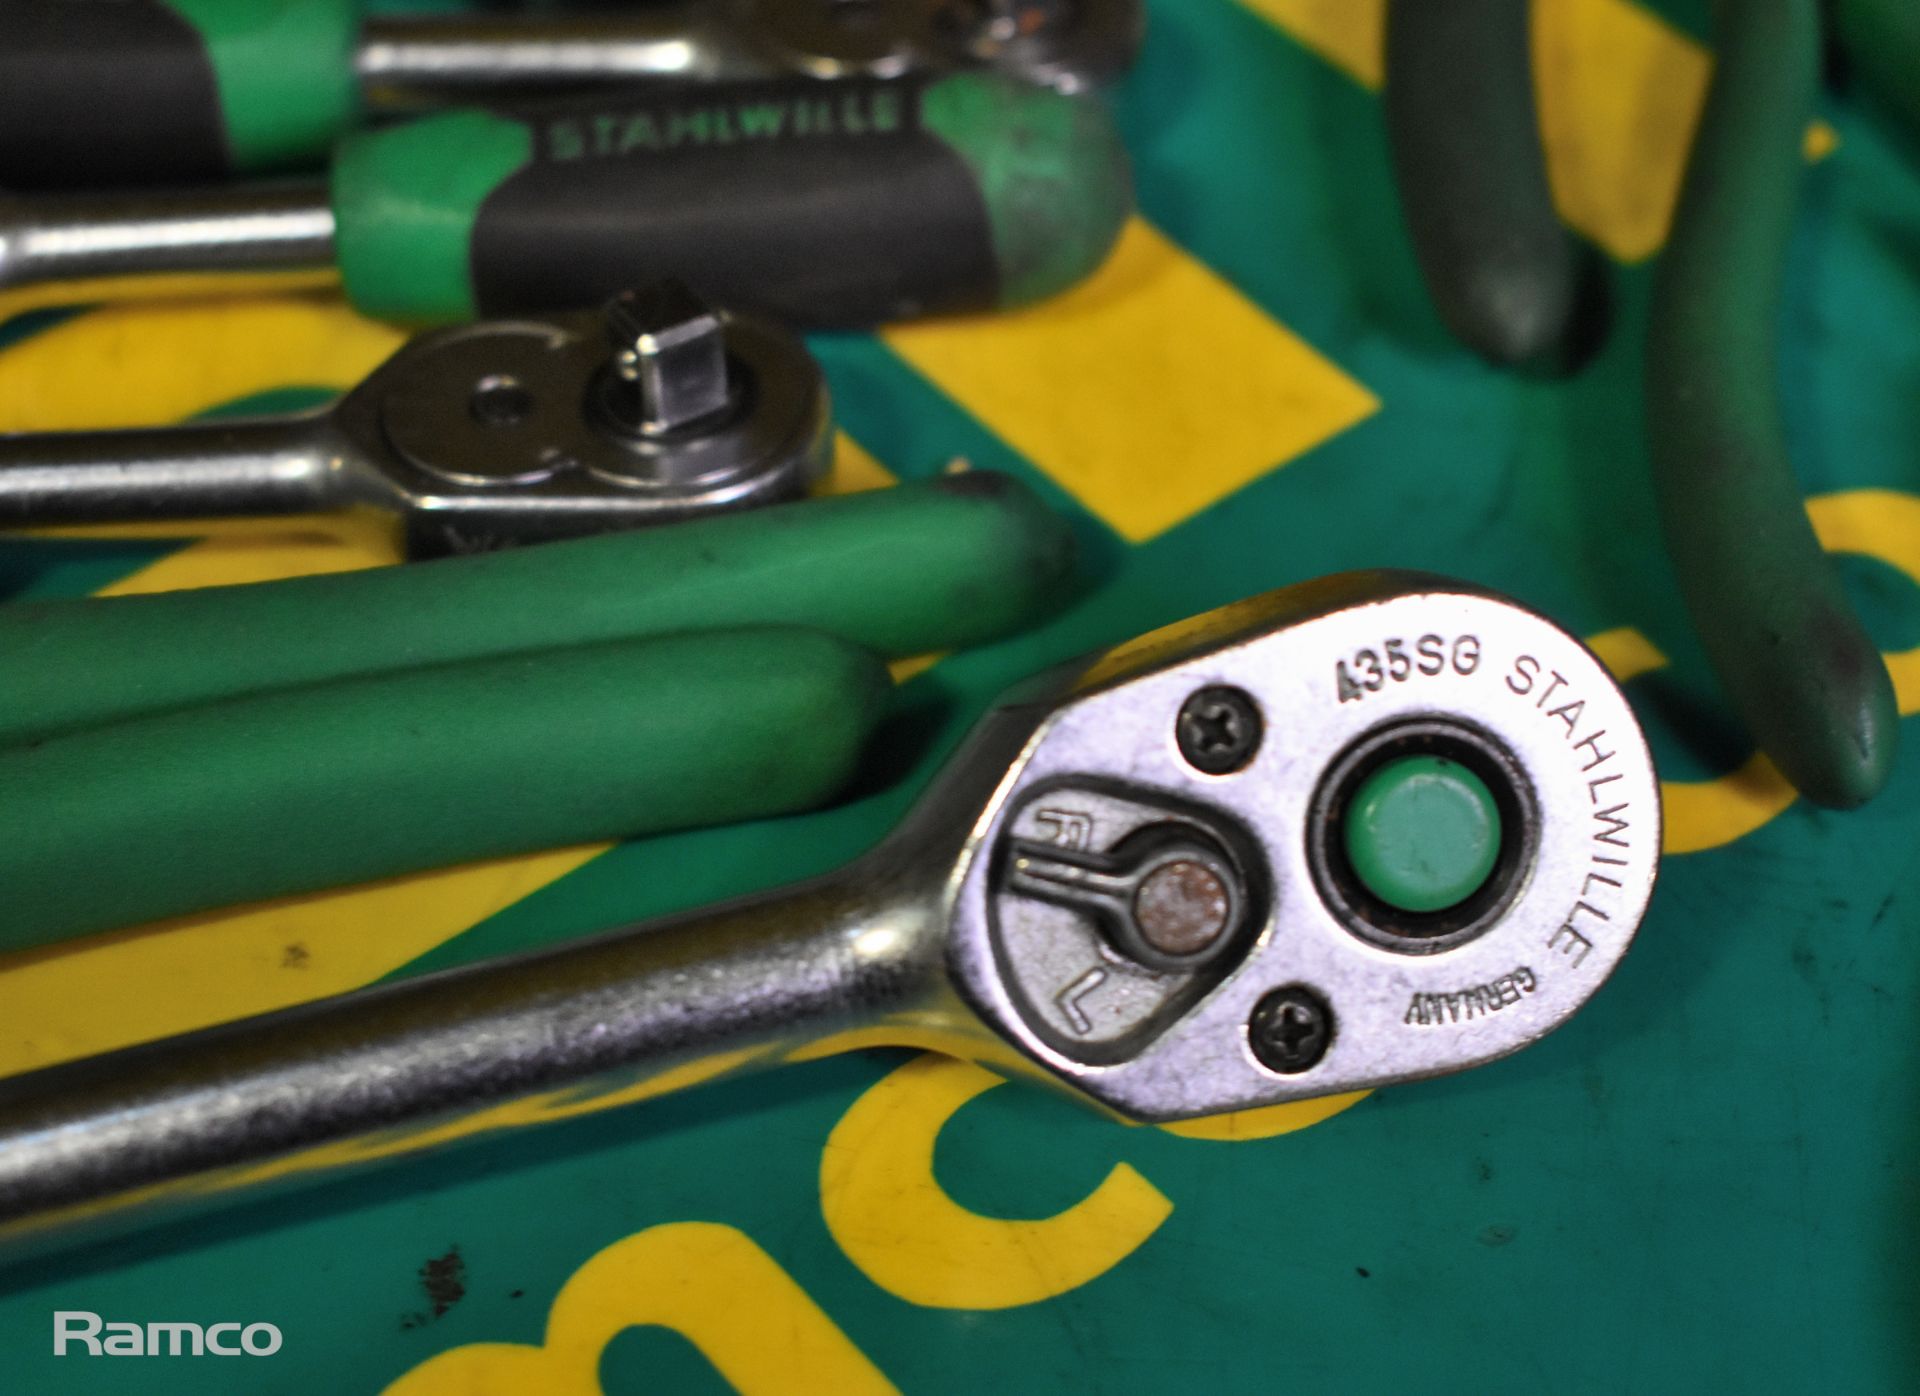 Stahlwille Tools - ratchets, screwdrivers, T-handle allen keys, sockets, feeler gauges, pliers - Image 3 of 10